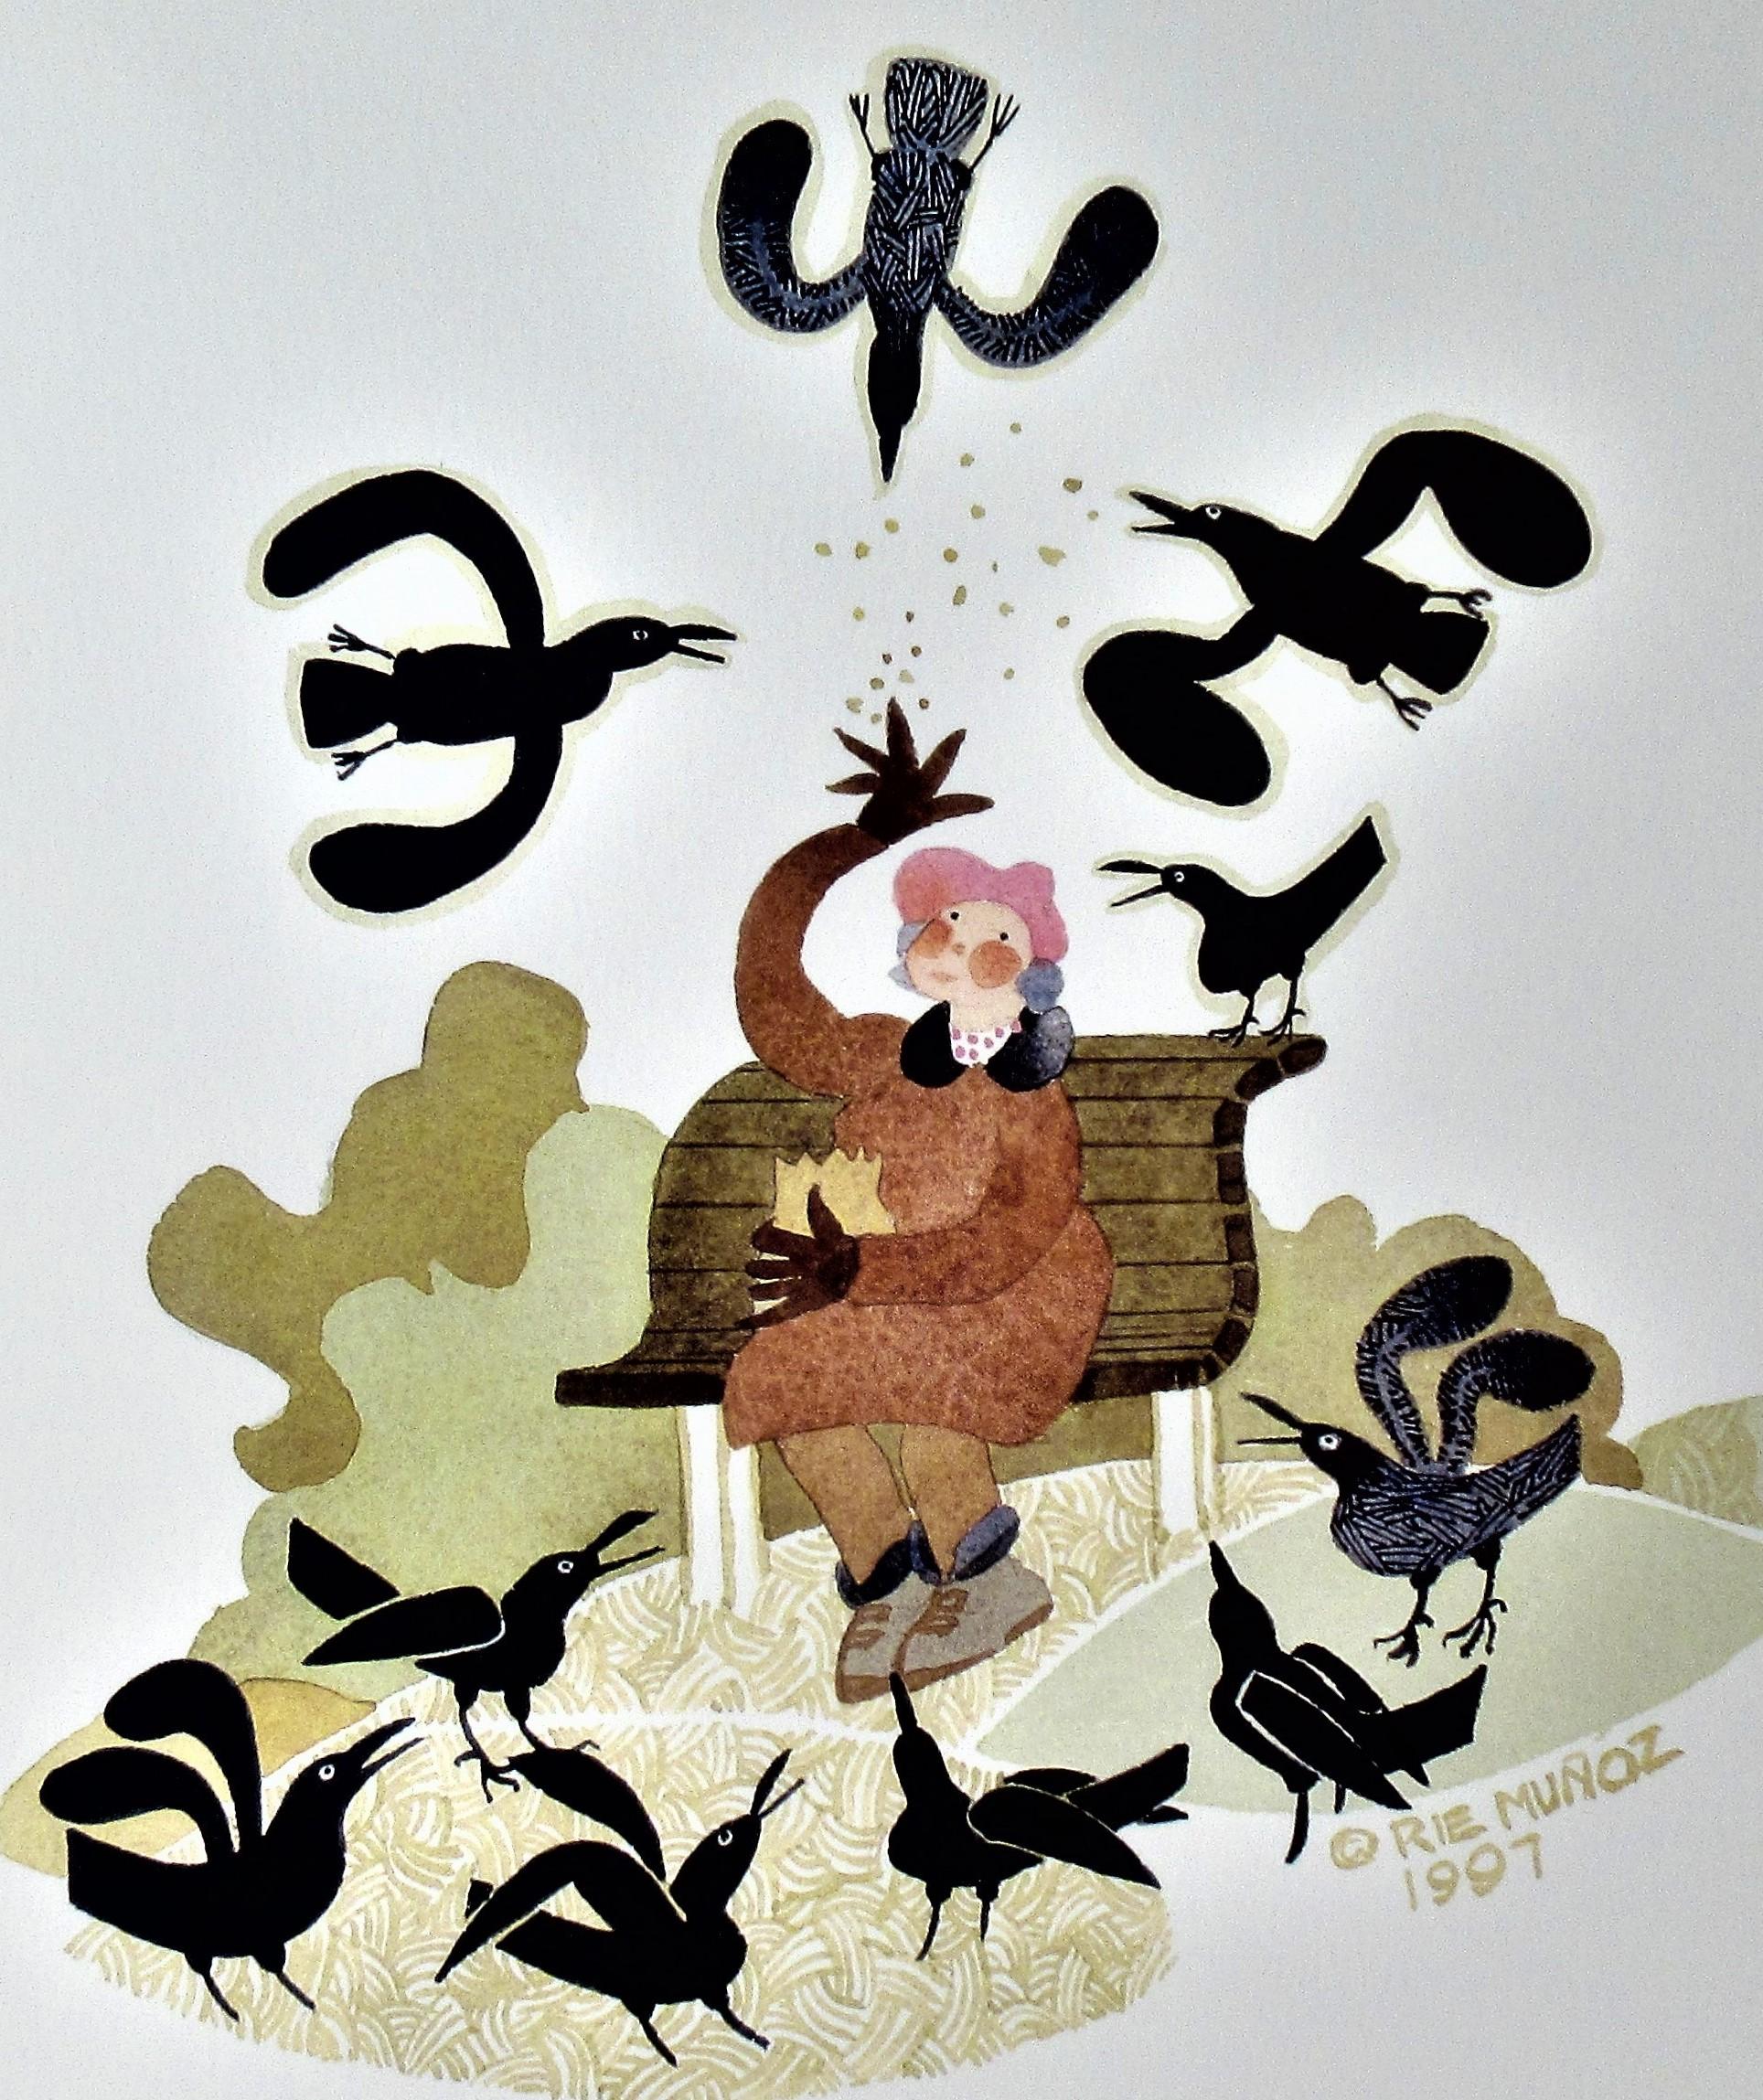 Feeding the Ravens - Print by Rie Munoz